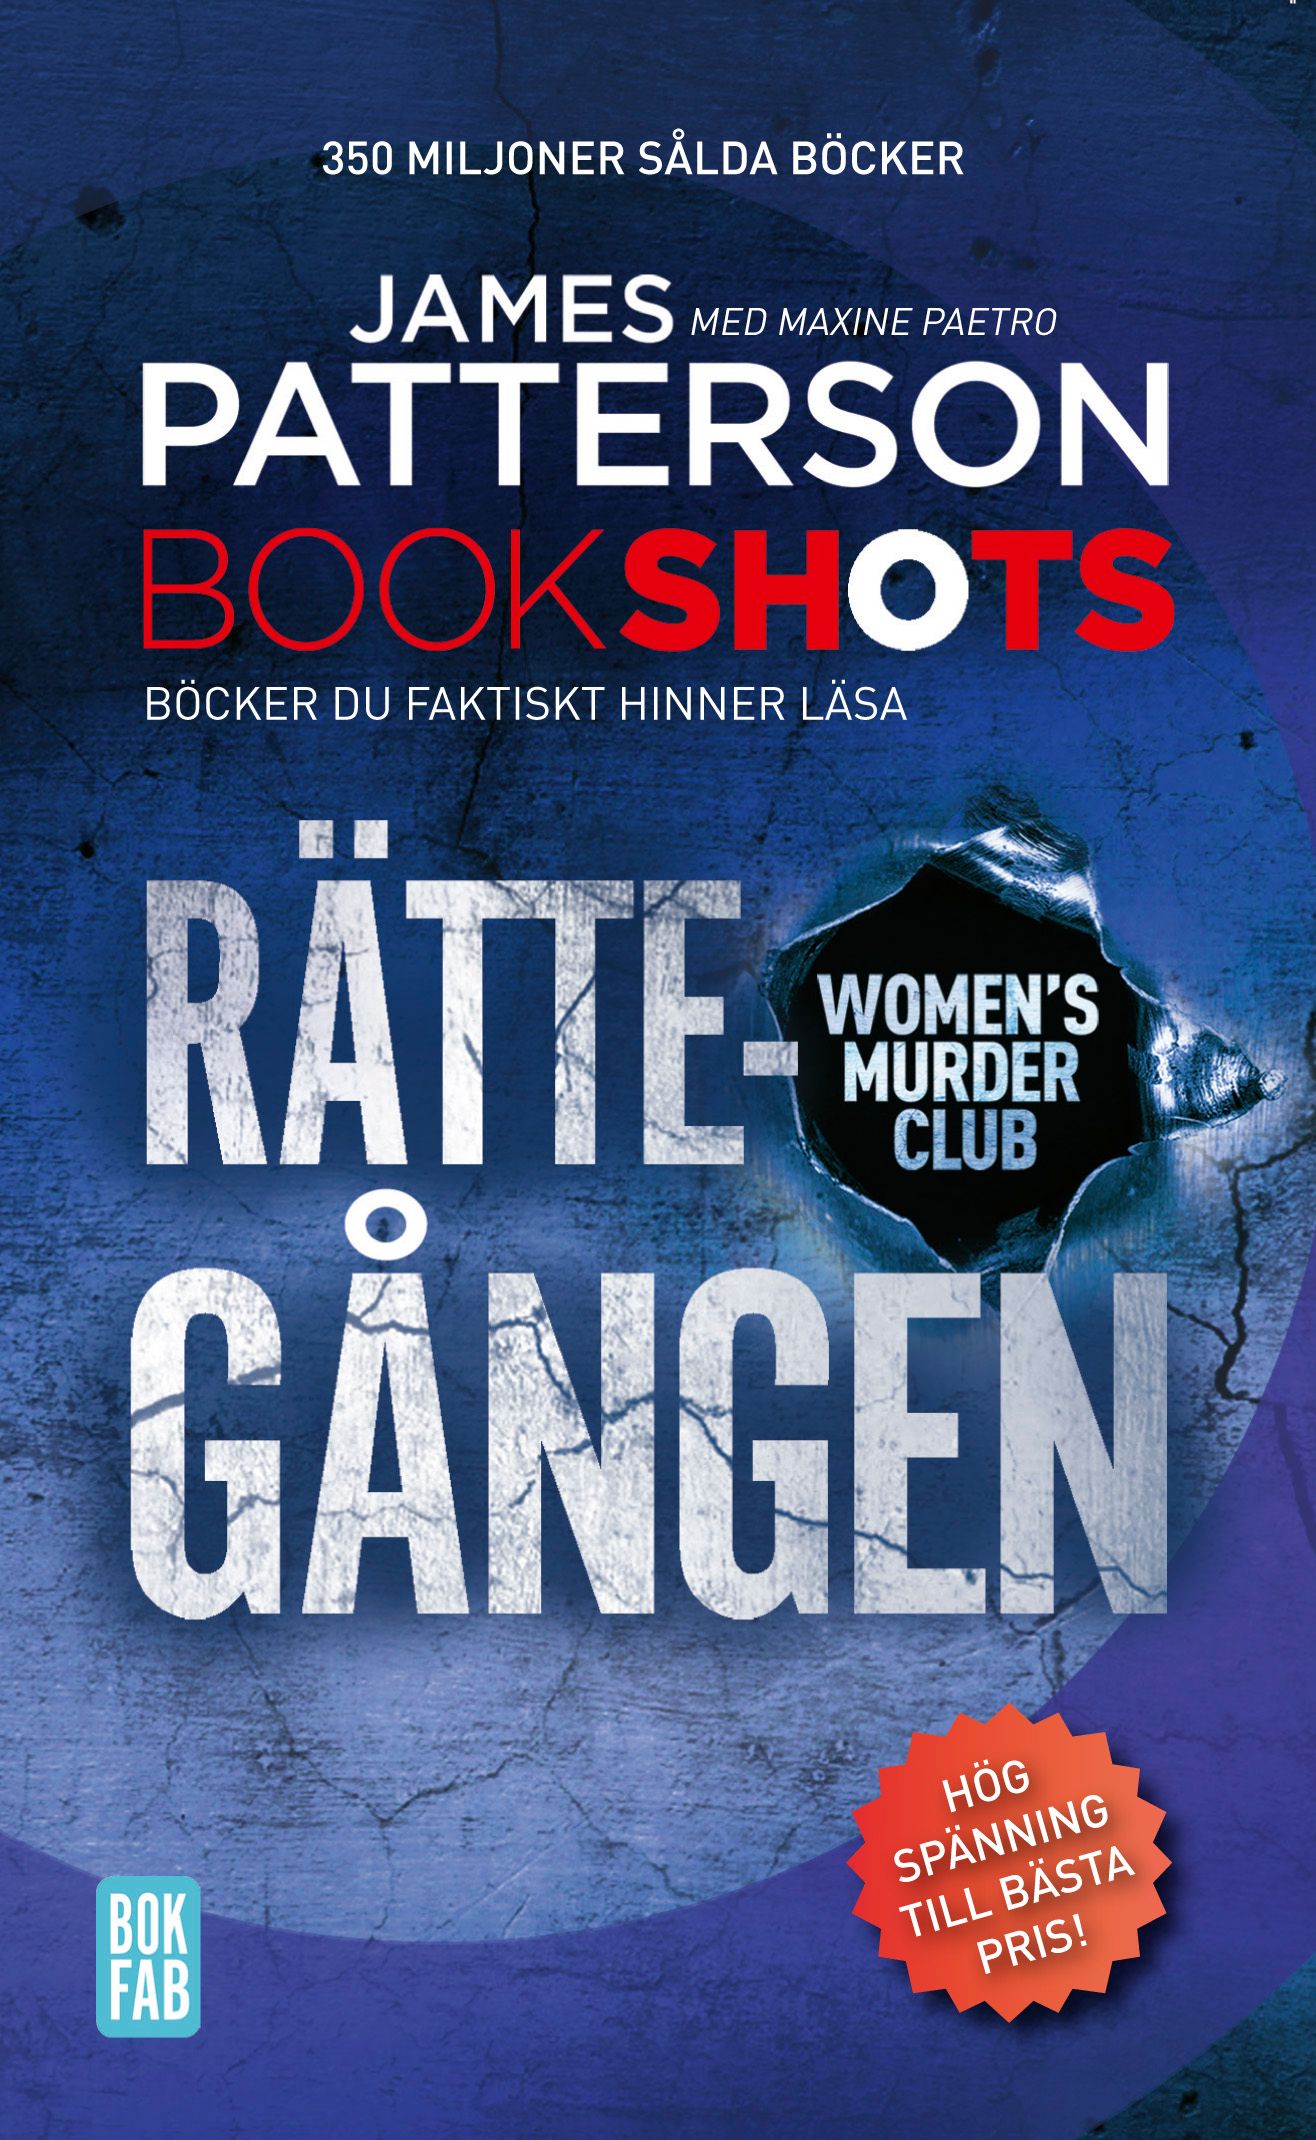 Bookshots: Rättegången - Women's murder club, e-bog af Maxine Paetro, James Patterson